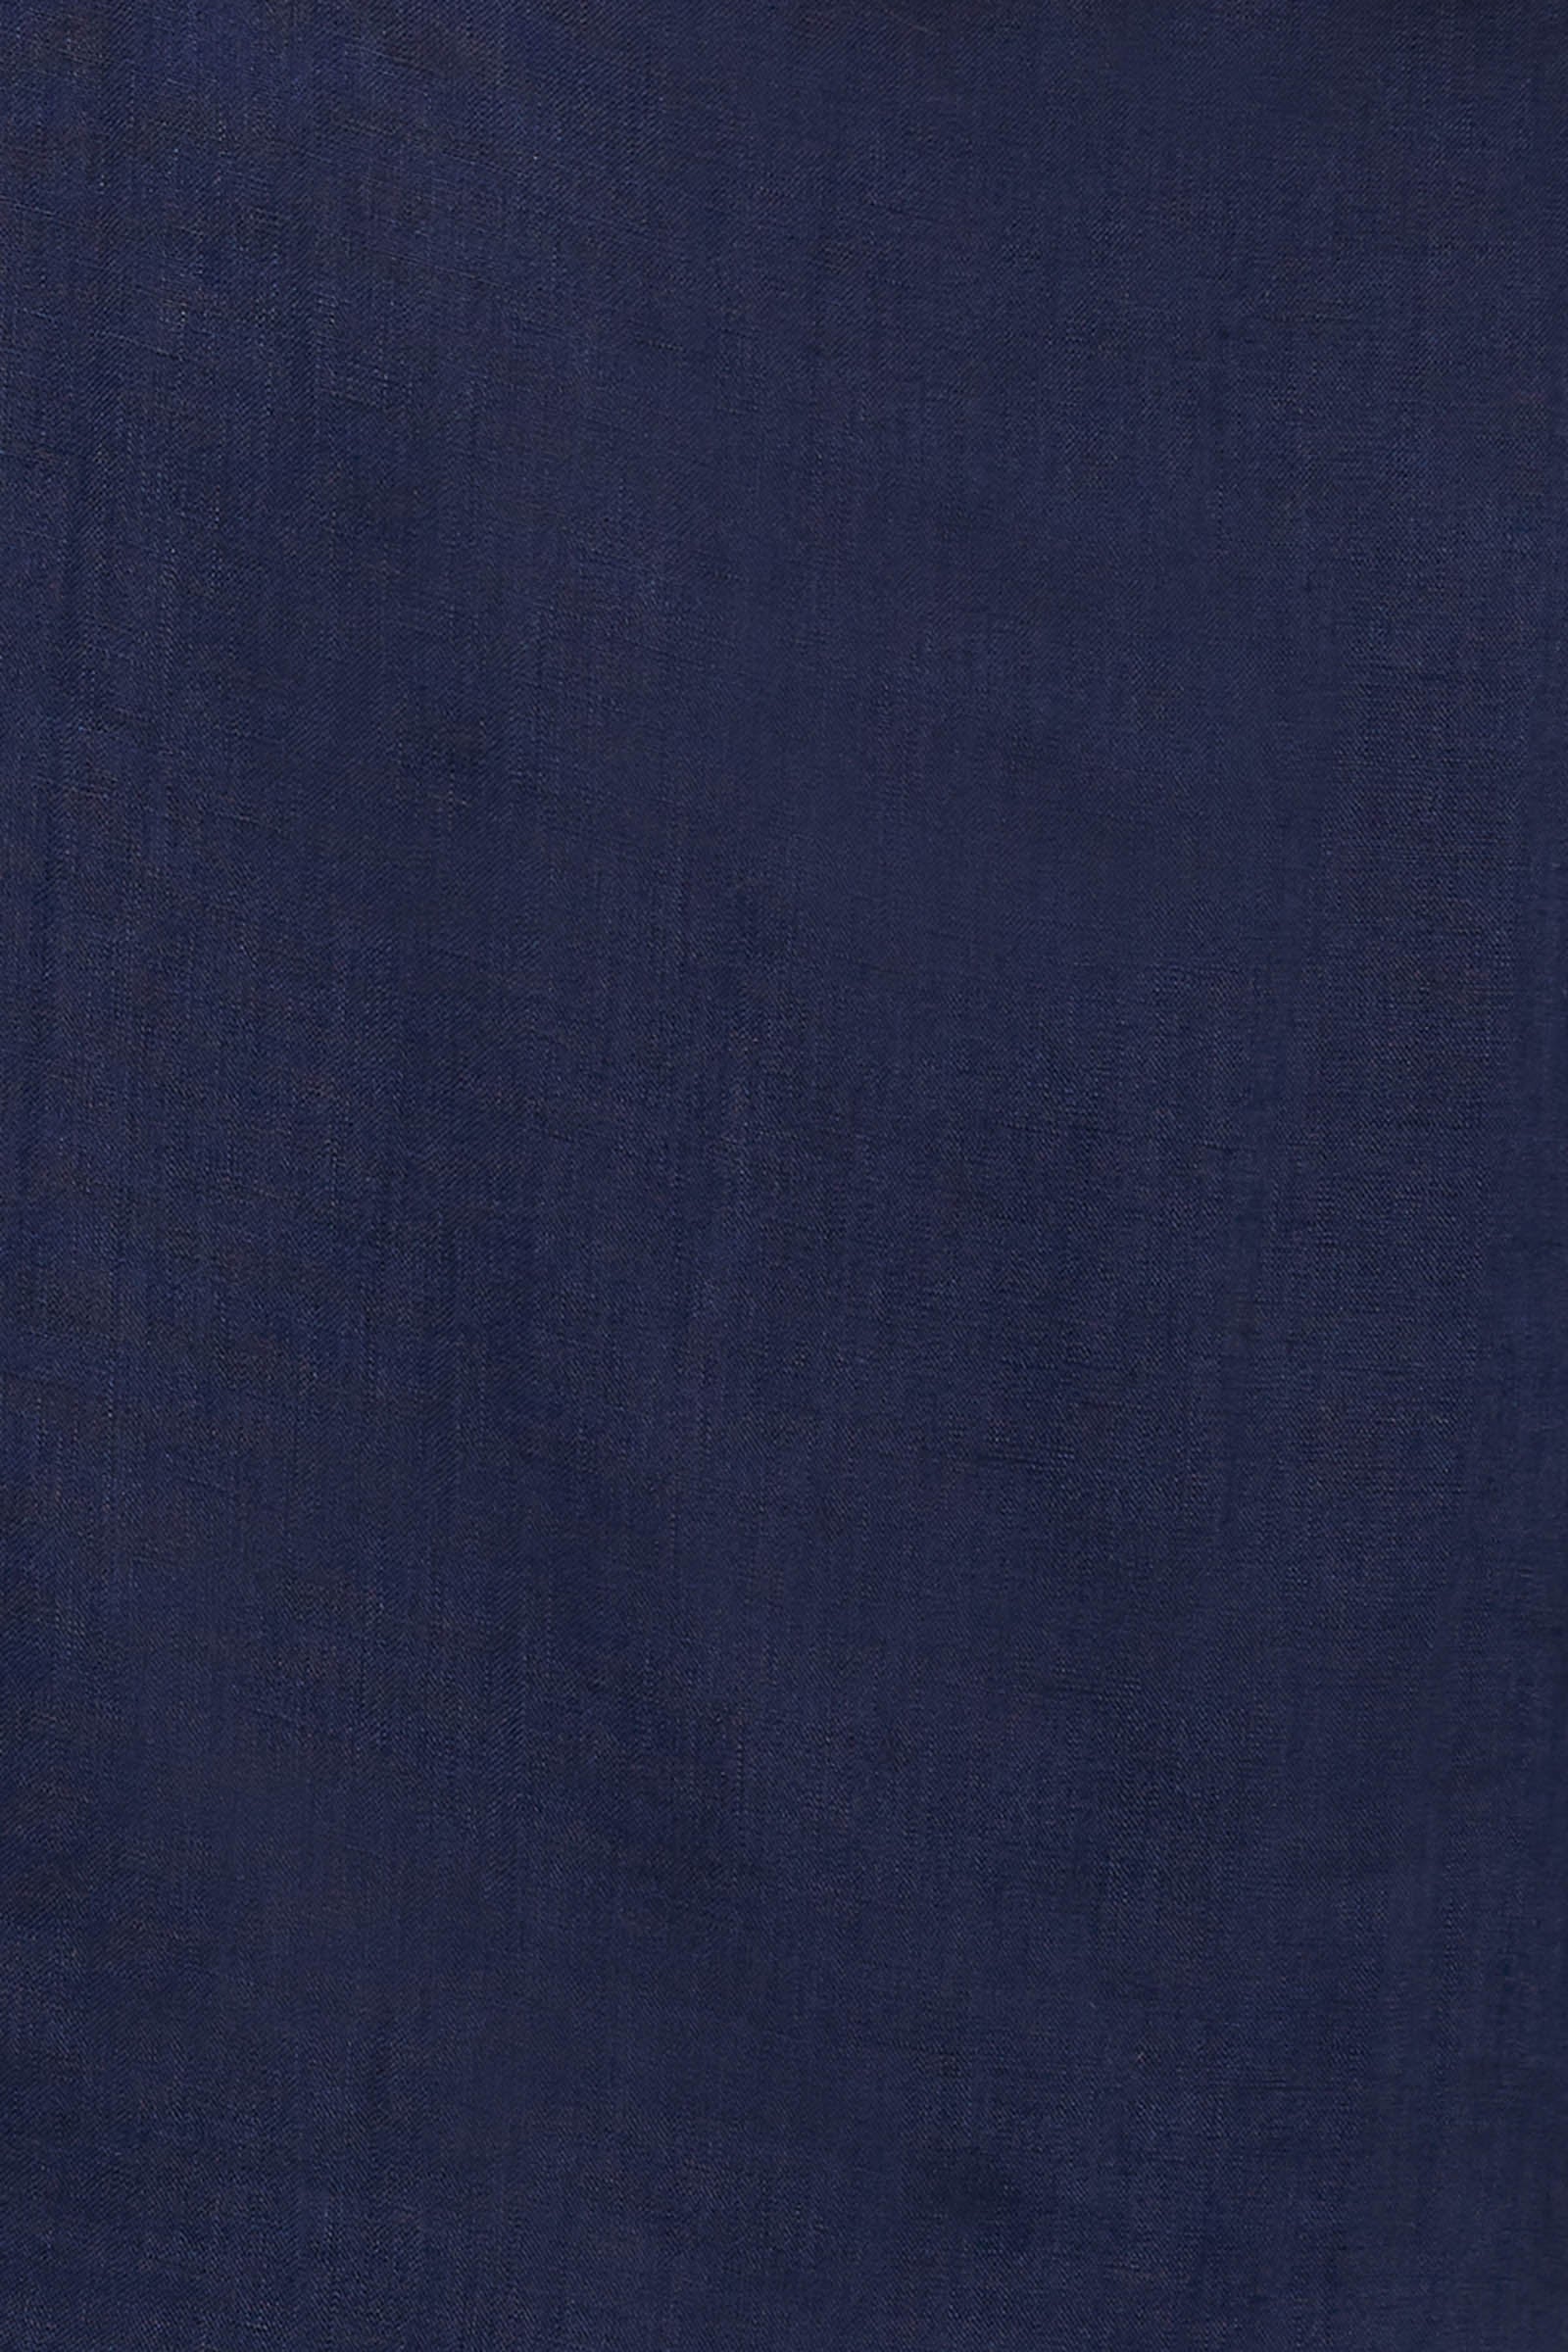 La Vie Frill Top - Sapphire - eb&ive Clothing - Top Sleeveless Linen